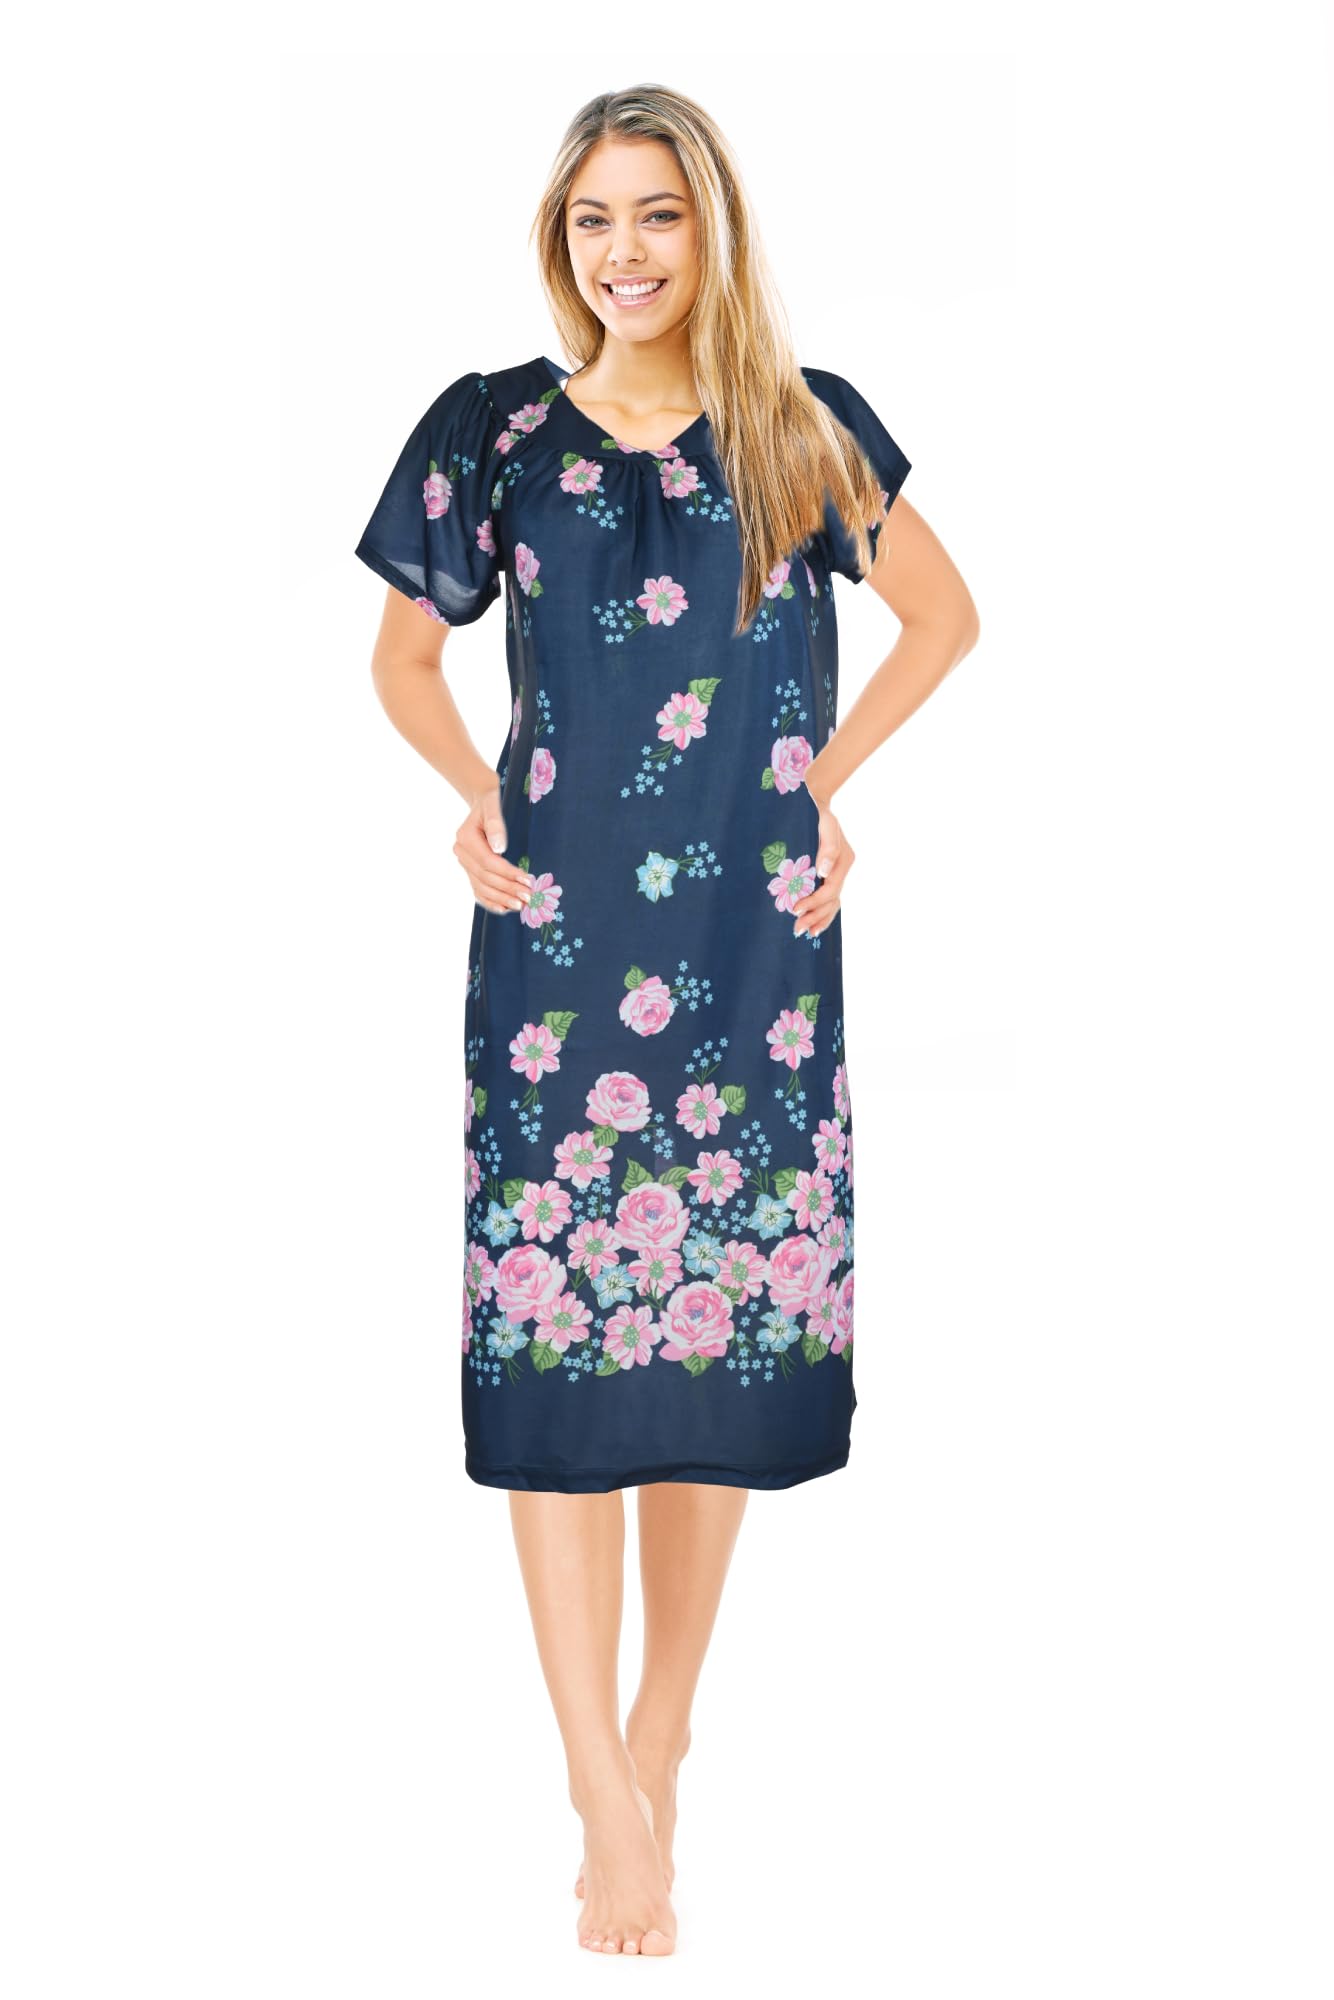 JEFFRICO Womens Nightgowns Muumuu Lounger House Dress Sleepwear